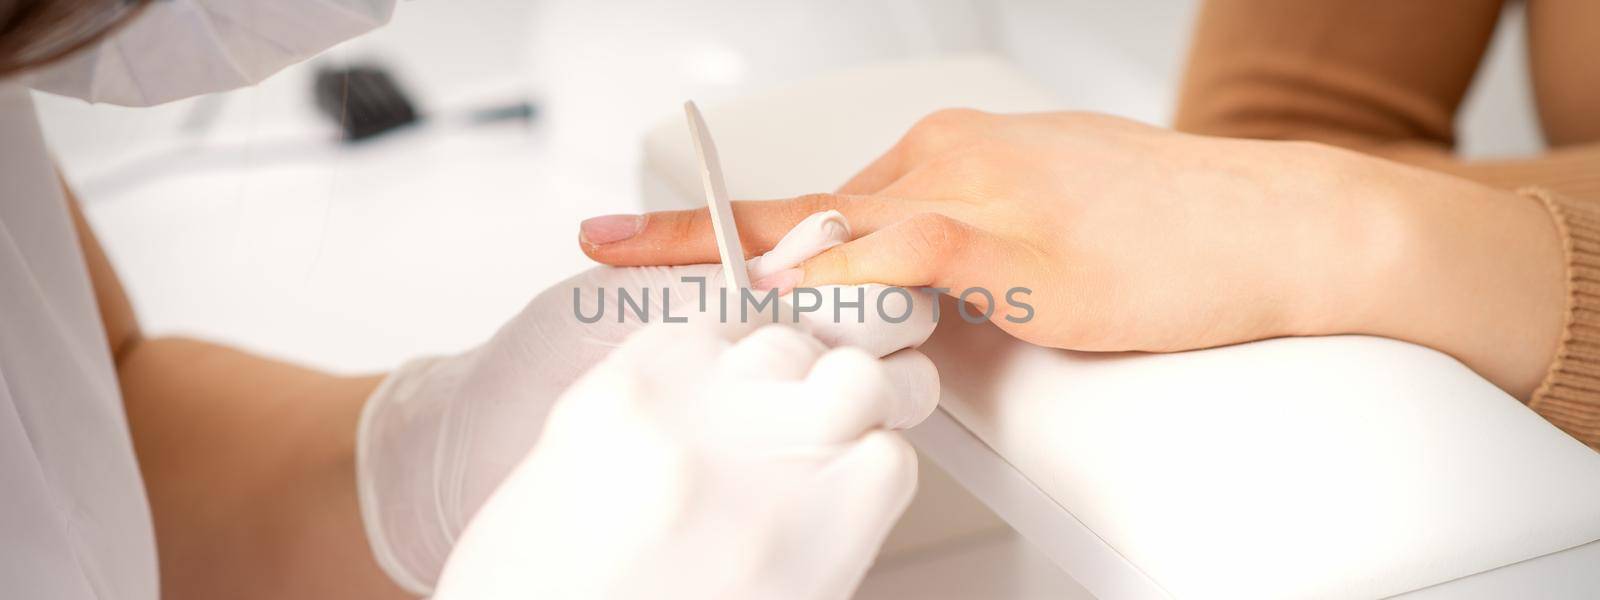 Hand receiving the nail file by okskukuruza